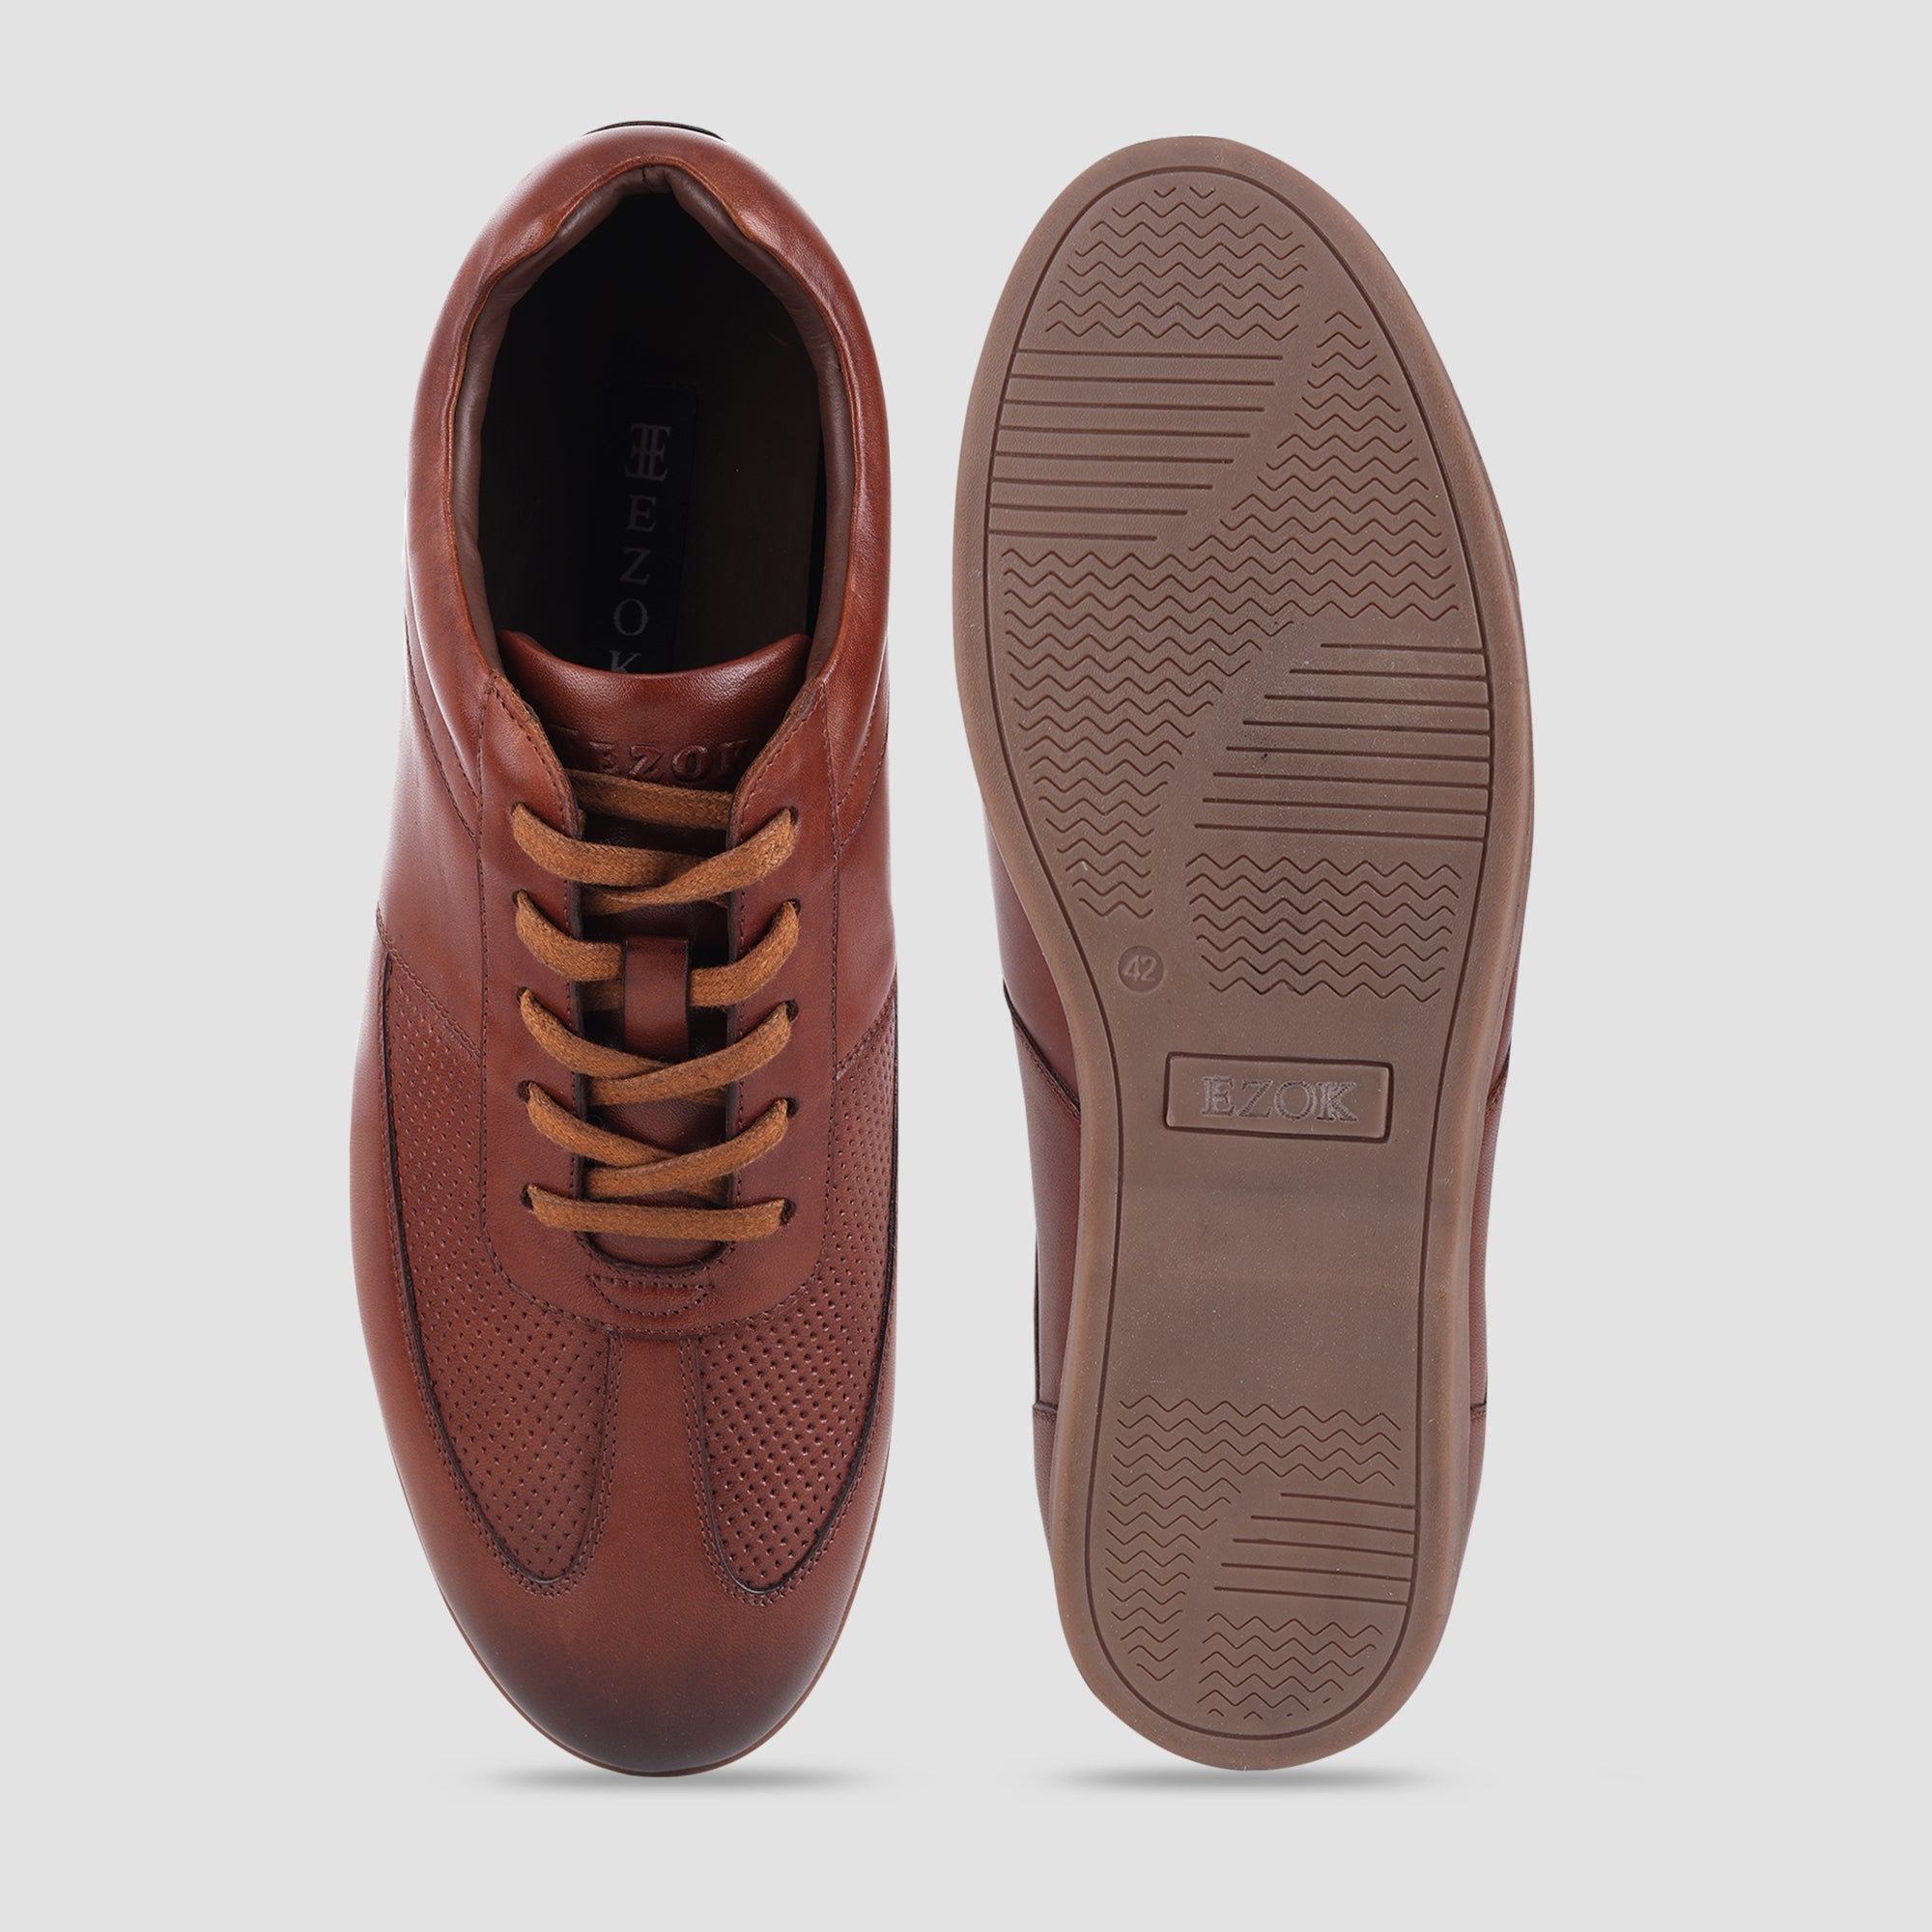 Ezok Leather Sneaker Shoes For Men